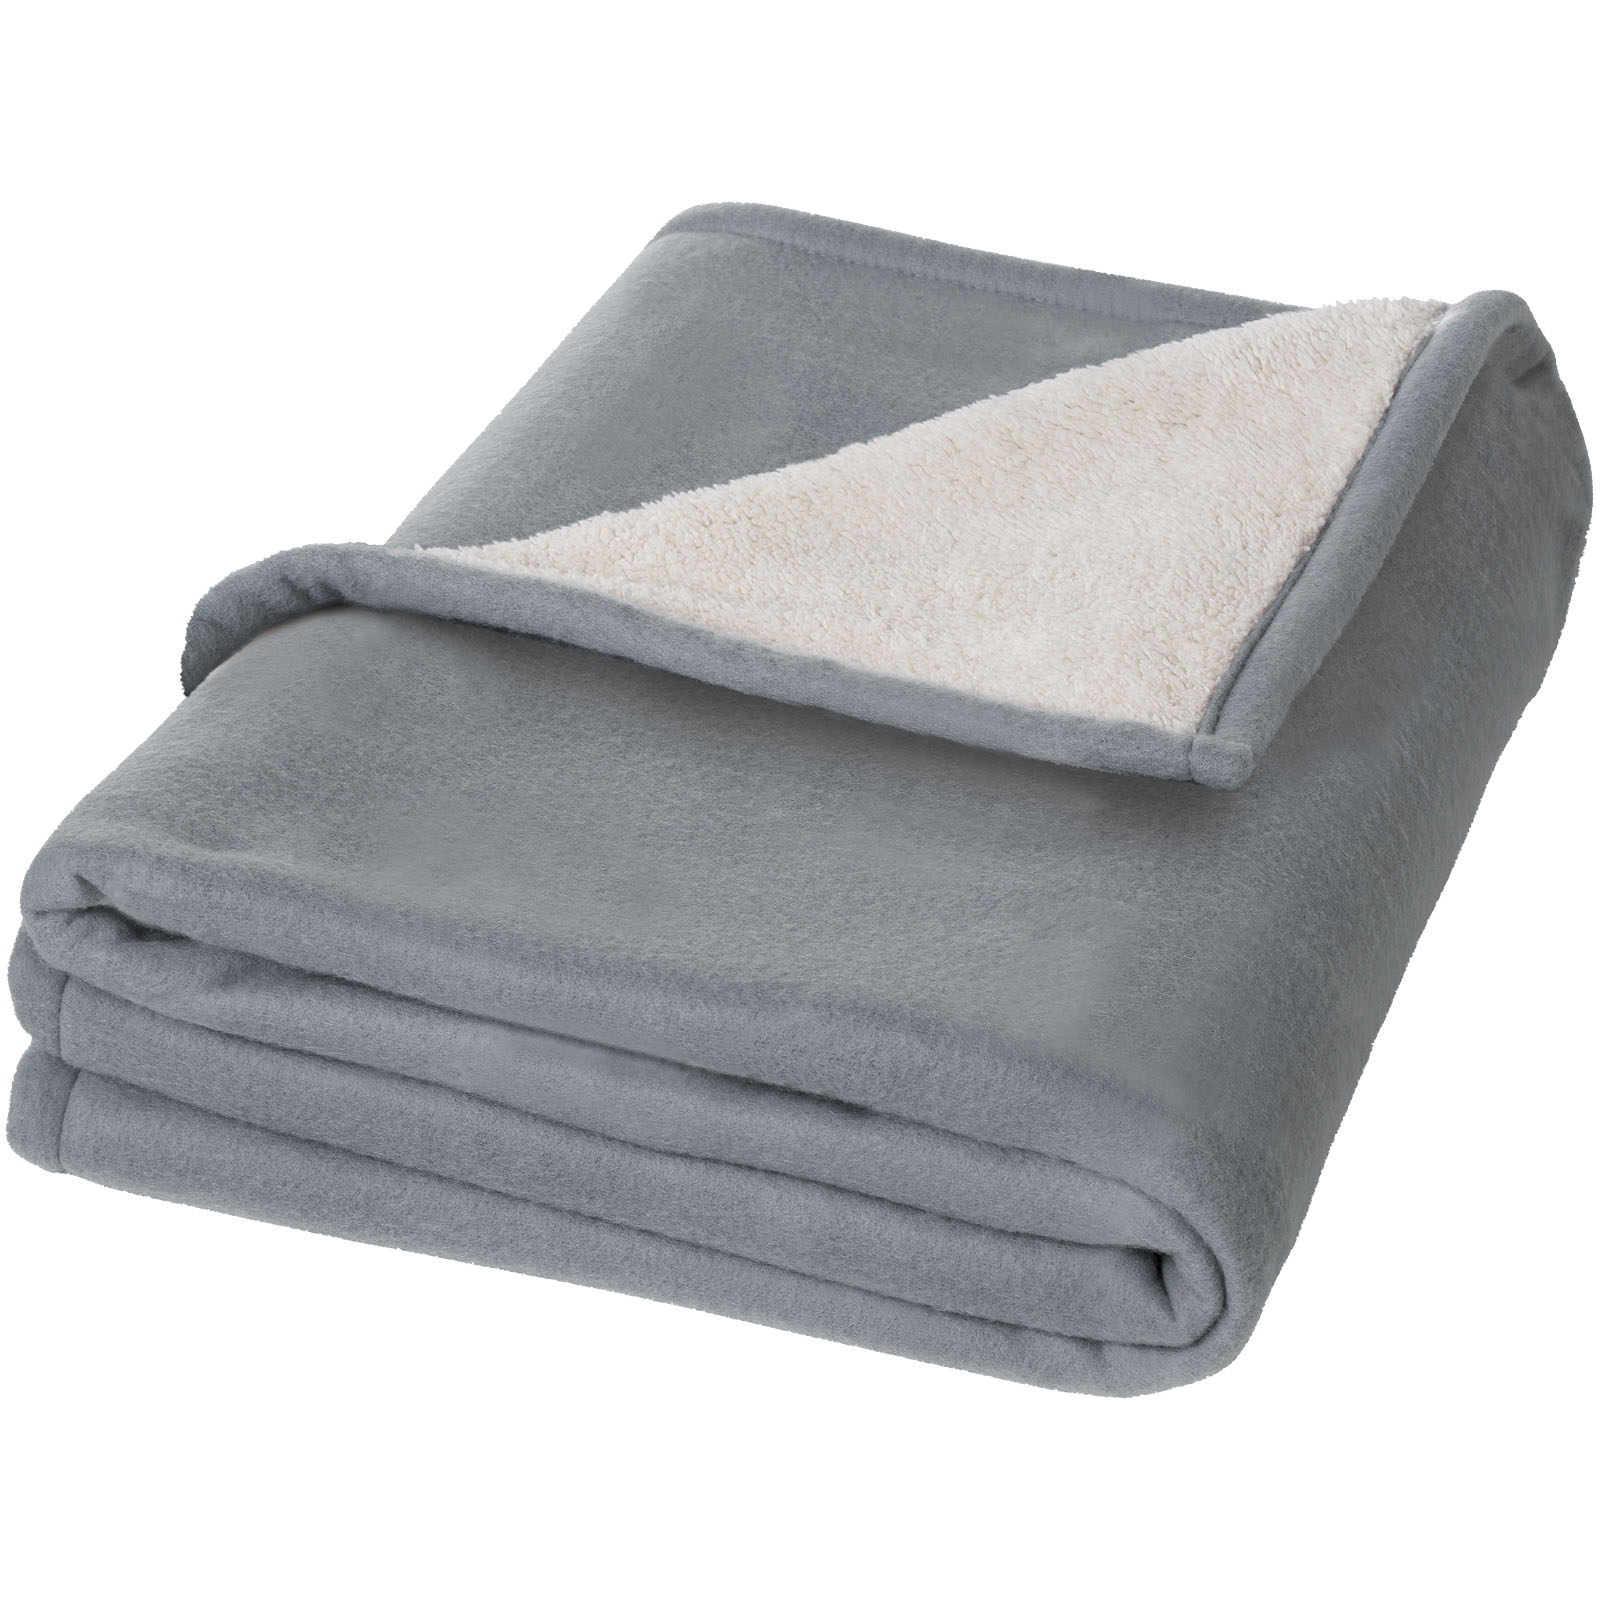 Advertising Blankets - Springwood soft fleece and sherpa plaid blanket